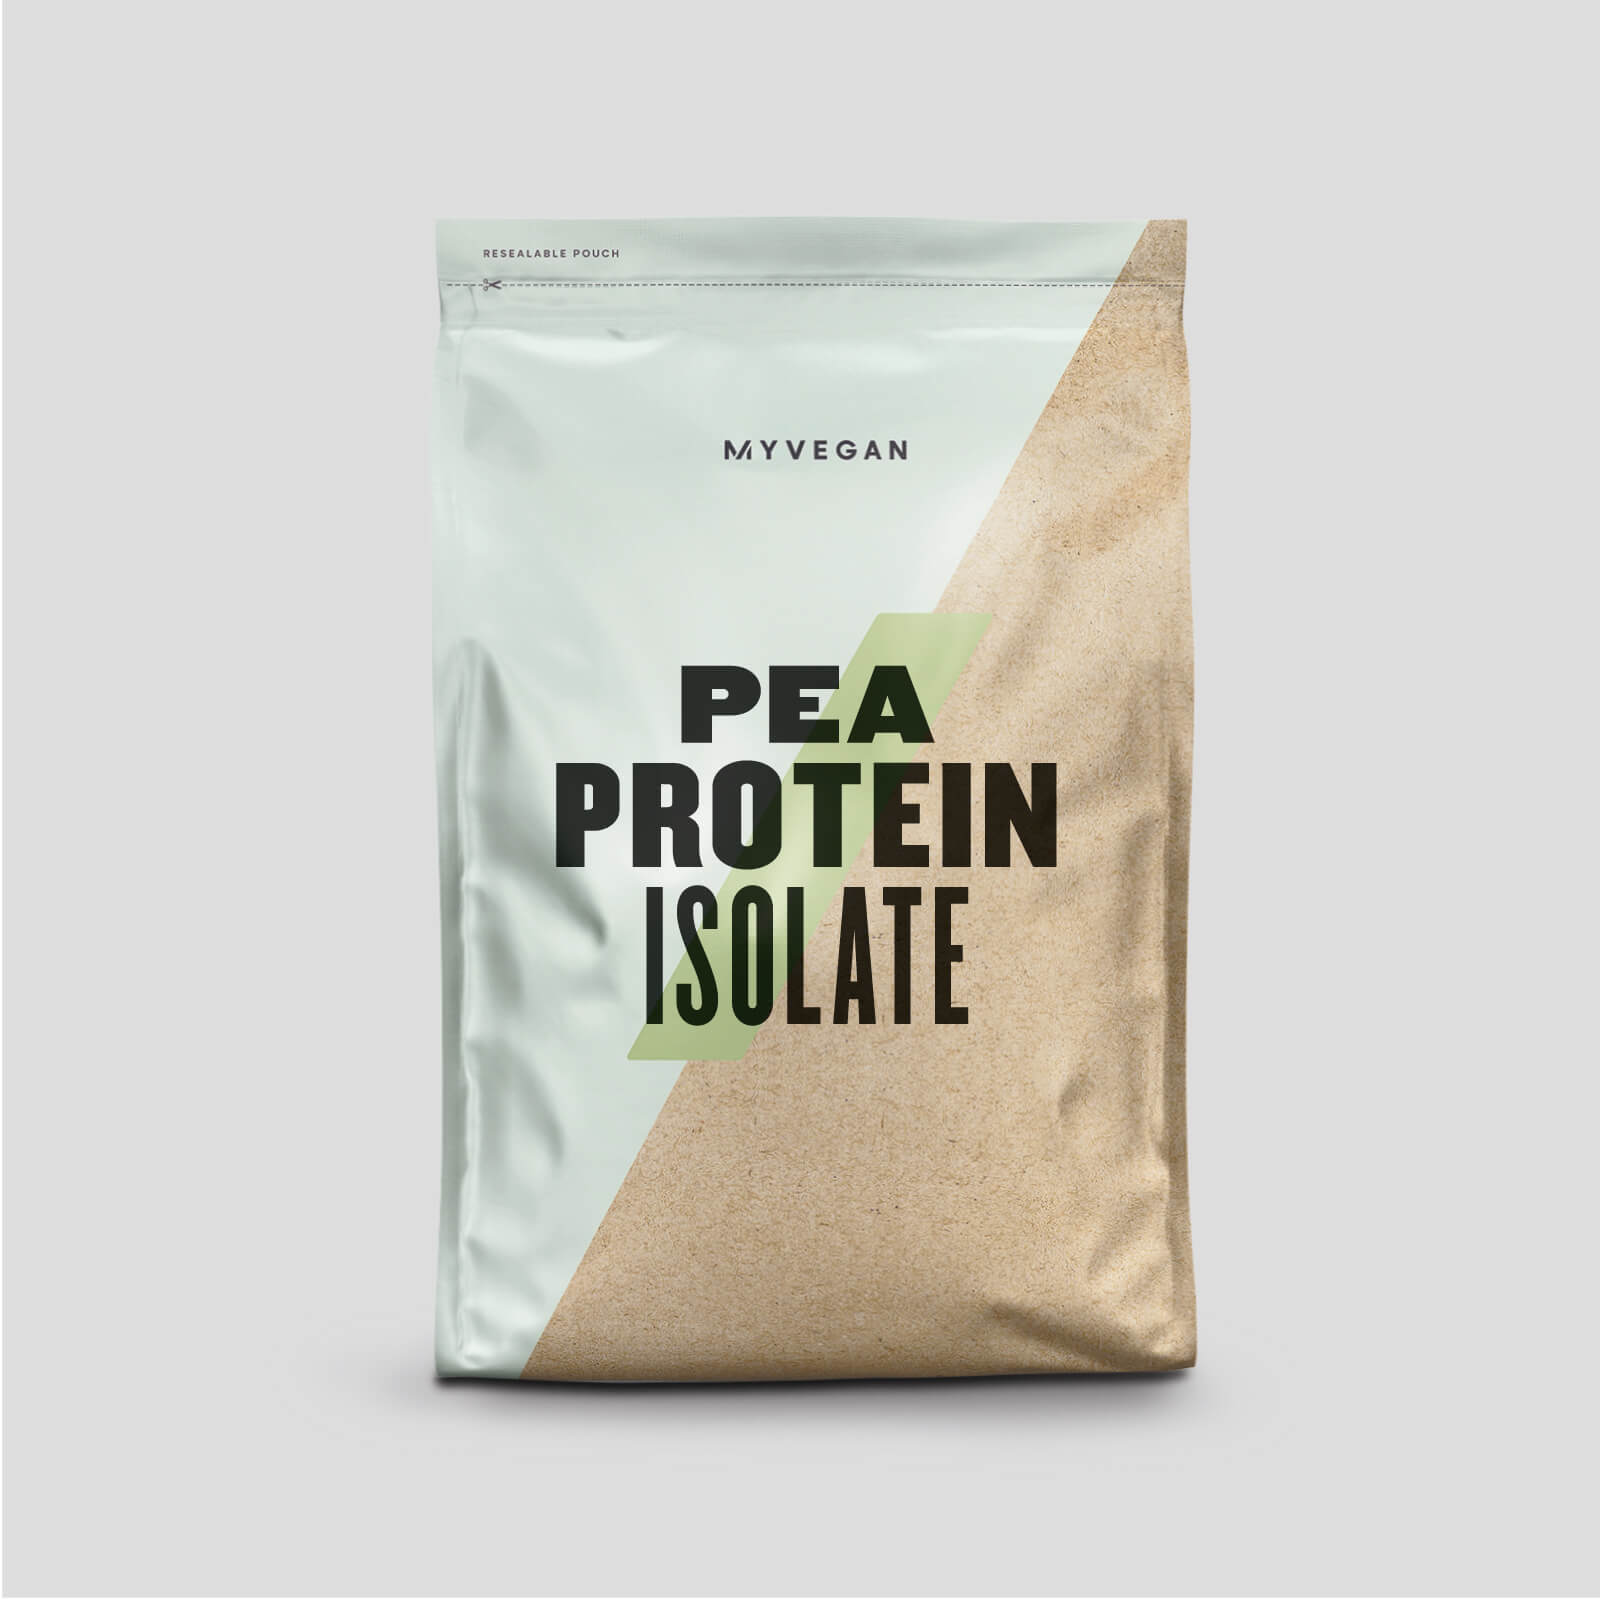 Myvegan Pea Protein Isolate - 1kg - Chocolate